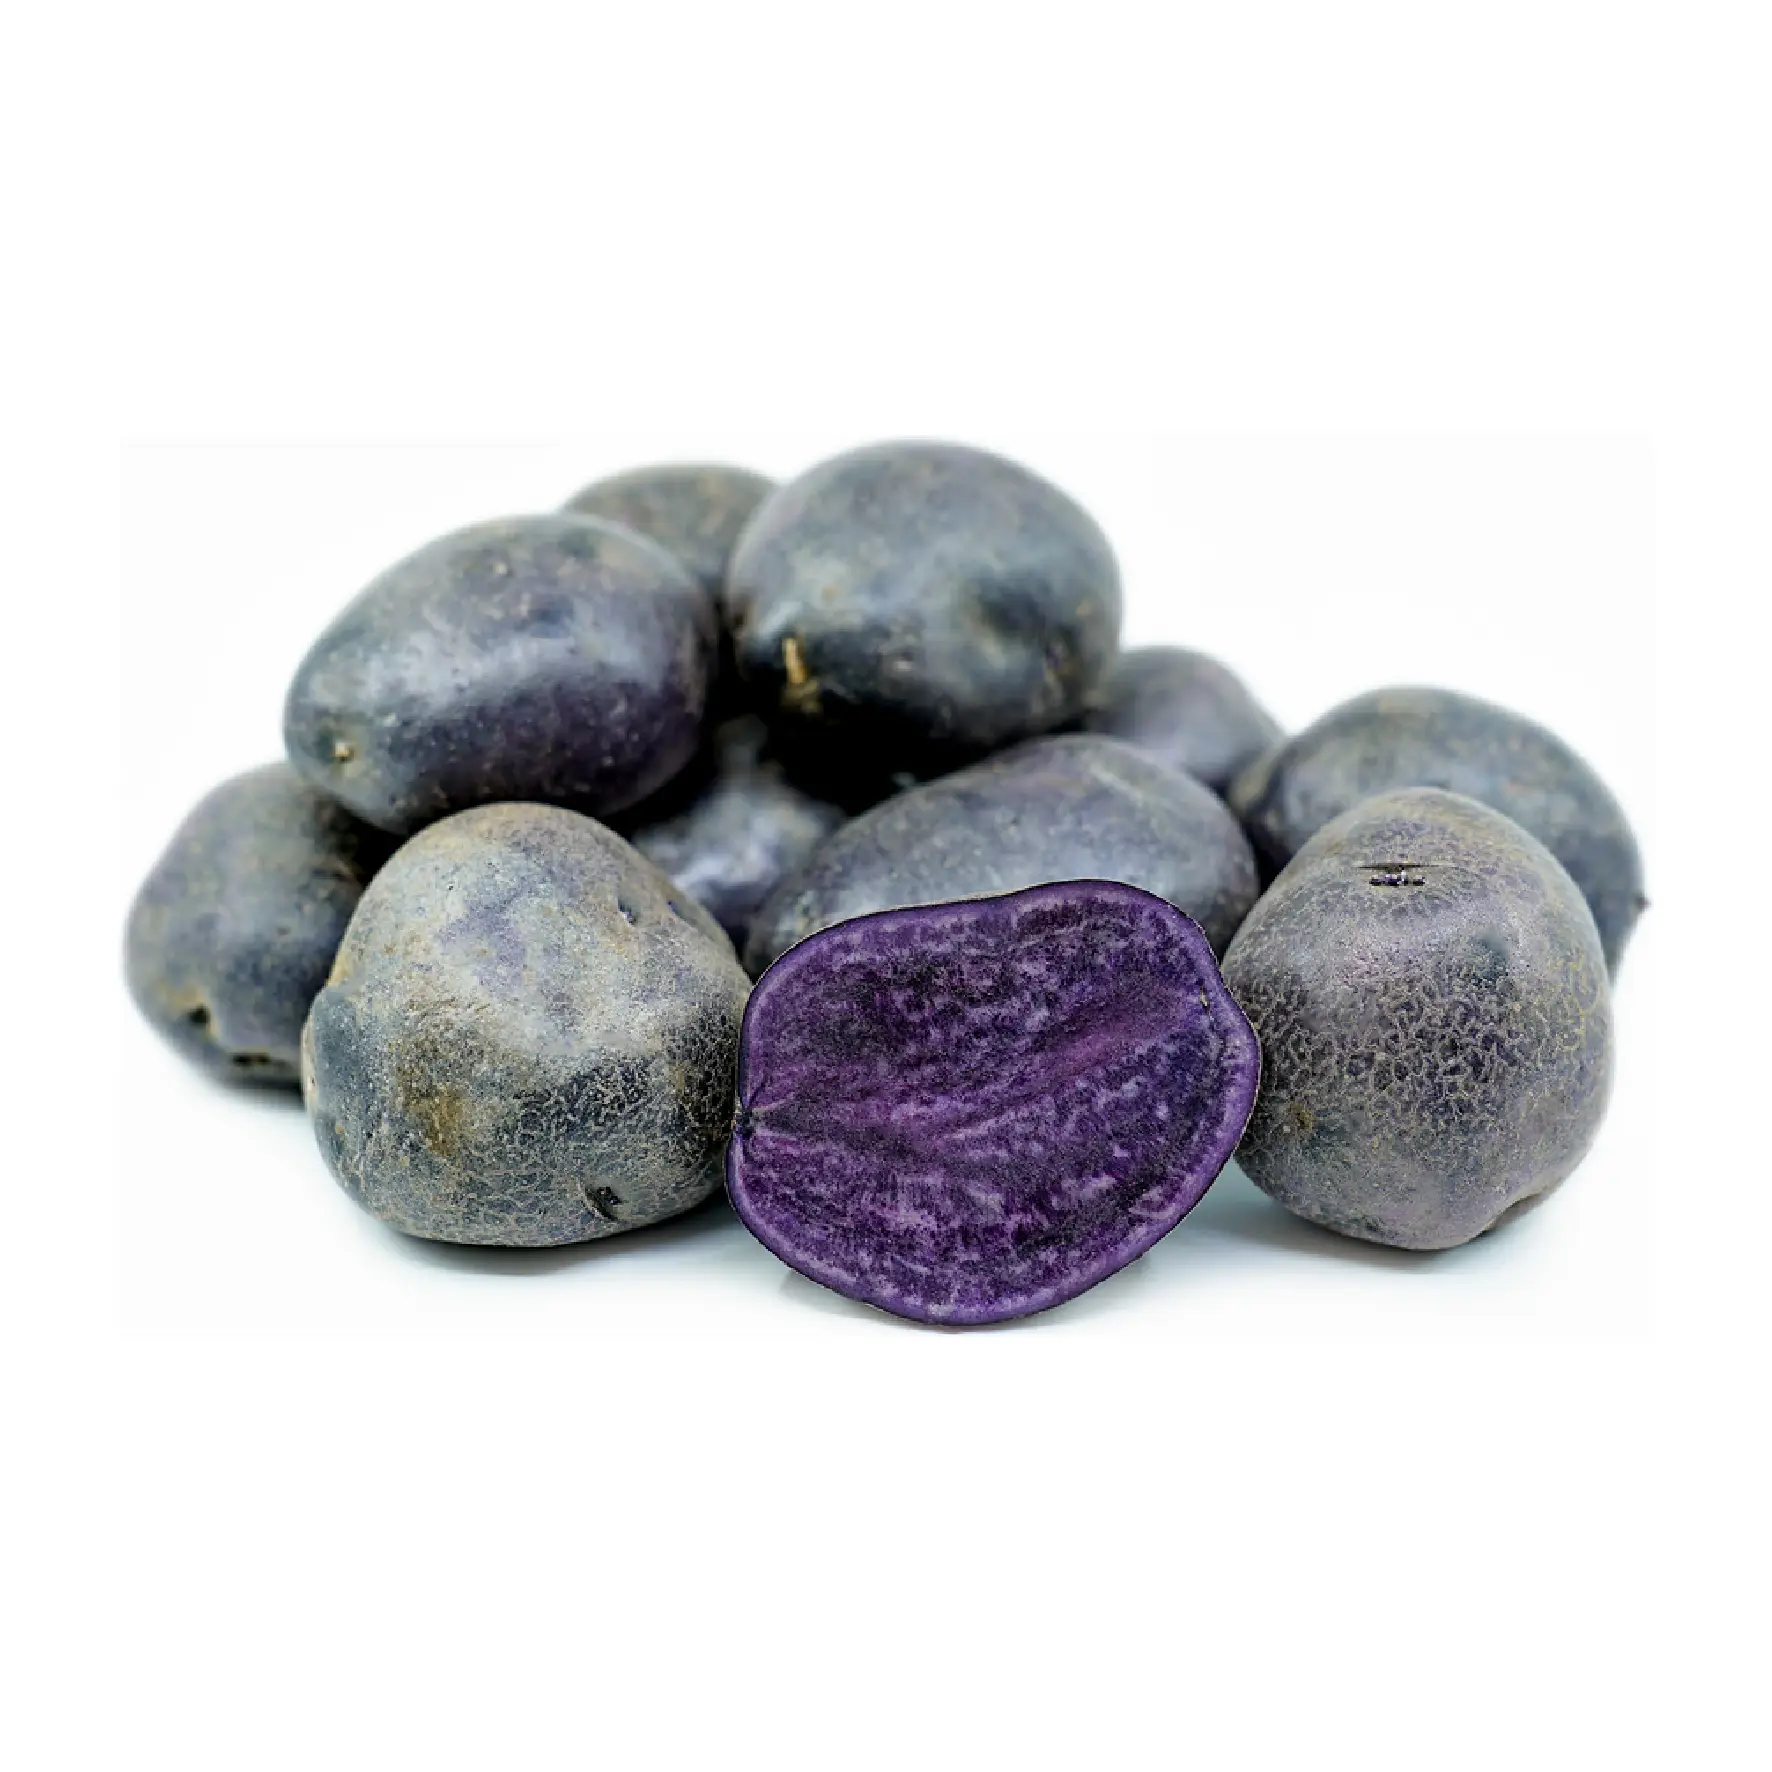 Organic Harvest Moon Purple Skin Potatoes Delivery